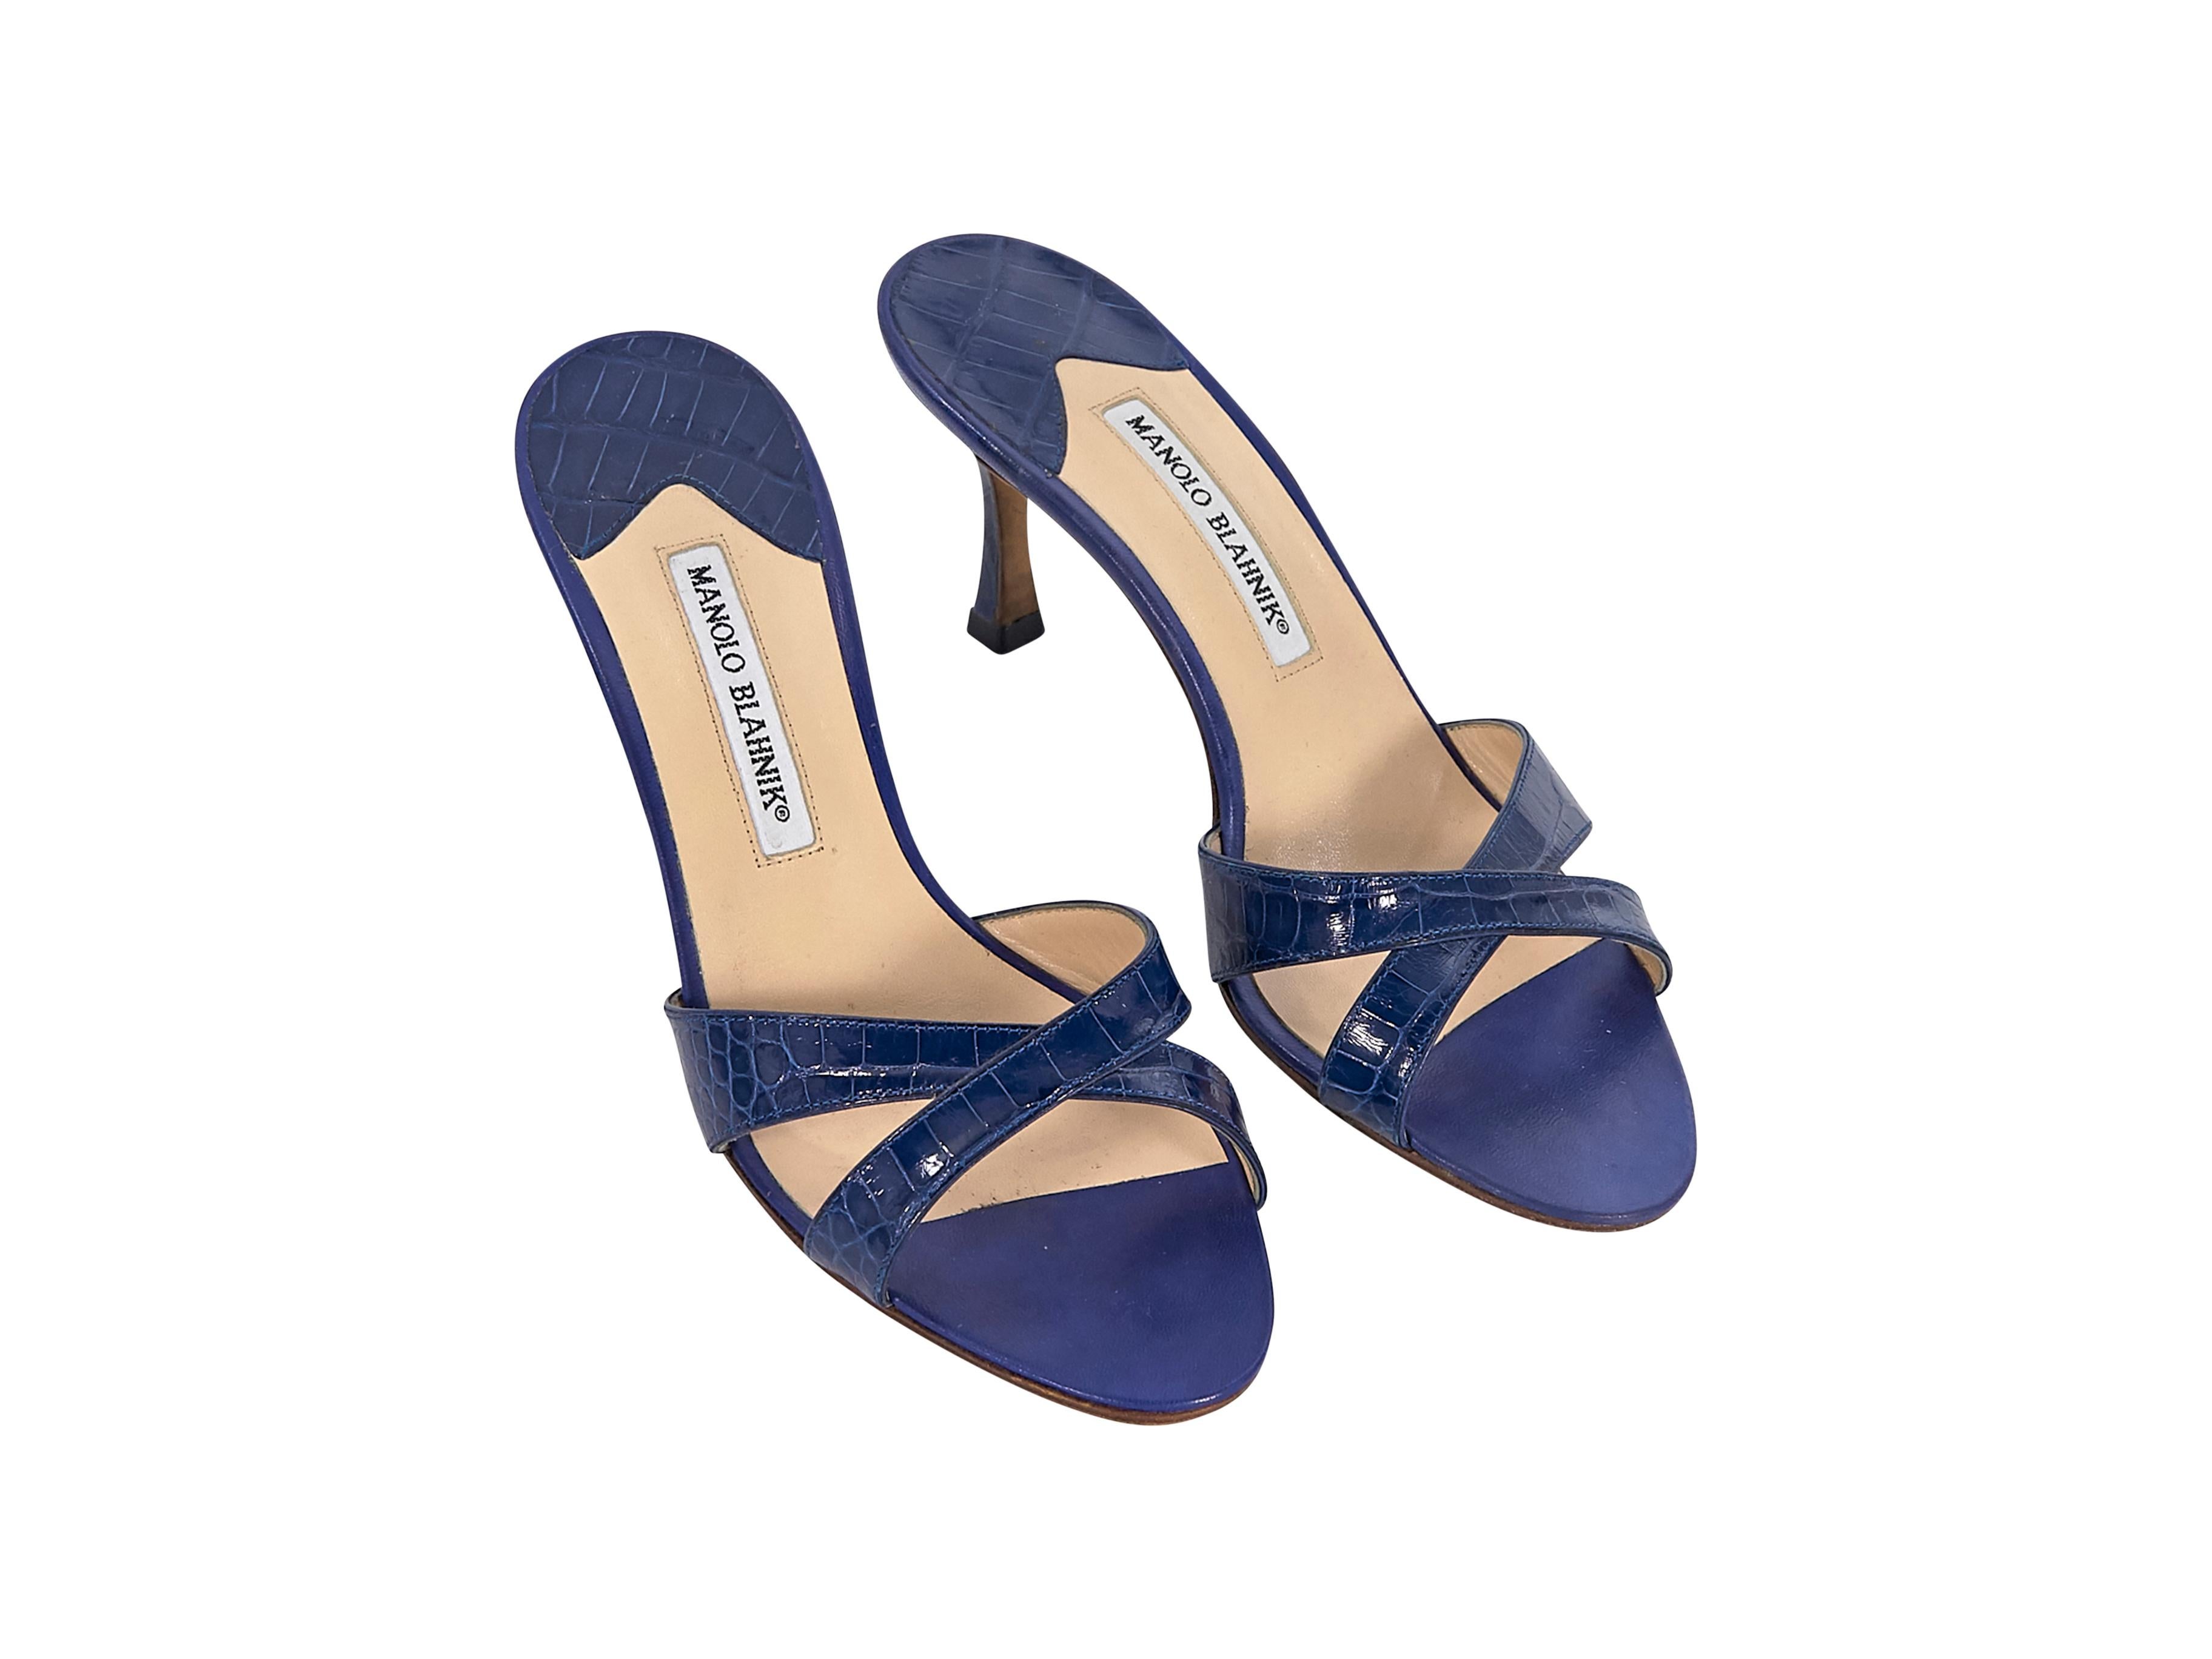 Product details:  Royal blue crocodile mule sandals by Manolo Blahnik.  Crisscross vamp.  Open toe.  Slip-on style.  2.5